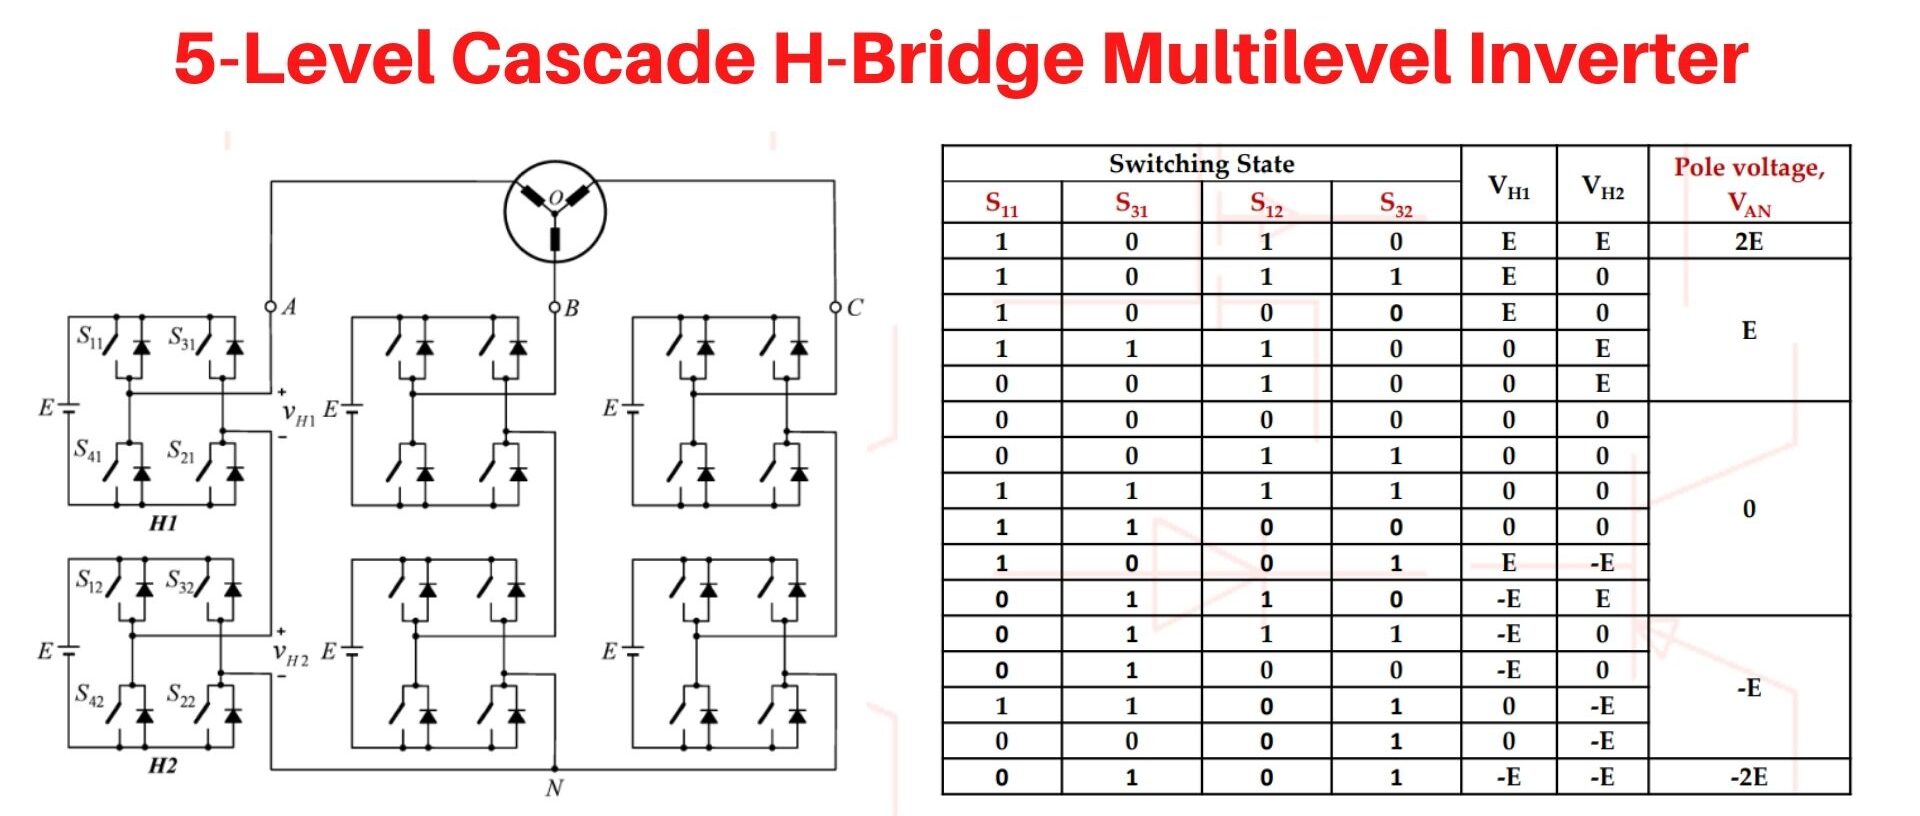 5-Level Cascade H-Bridge Multilevel Inverter